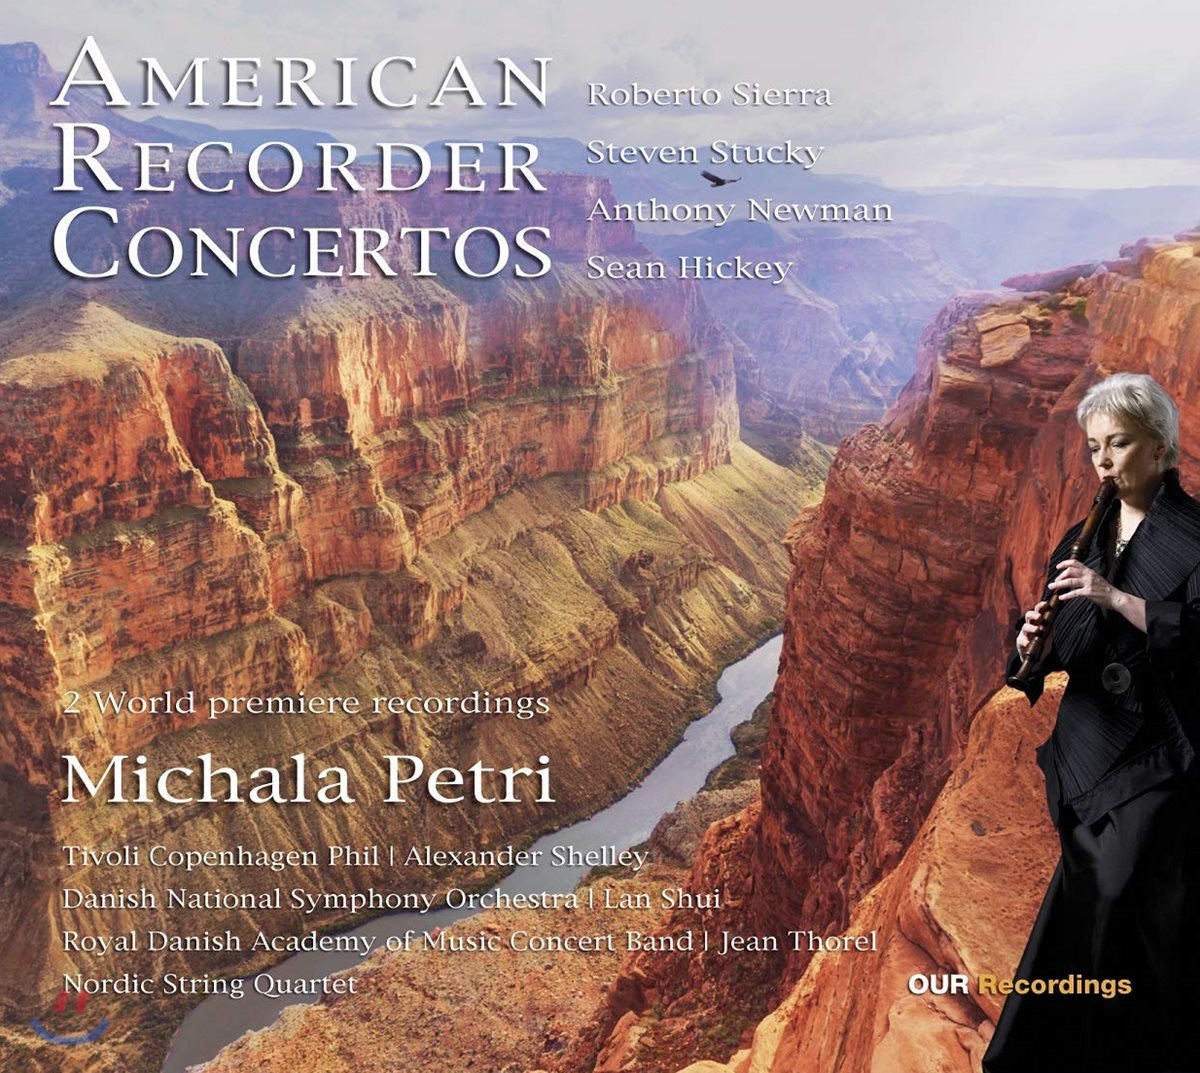 Michala Petri 2000~2016년 미국 작곡가의 리코더 협주곡 모음집 (American Recorder Concertos)